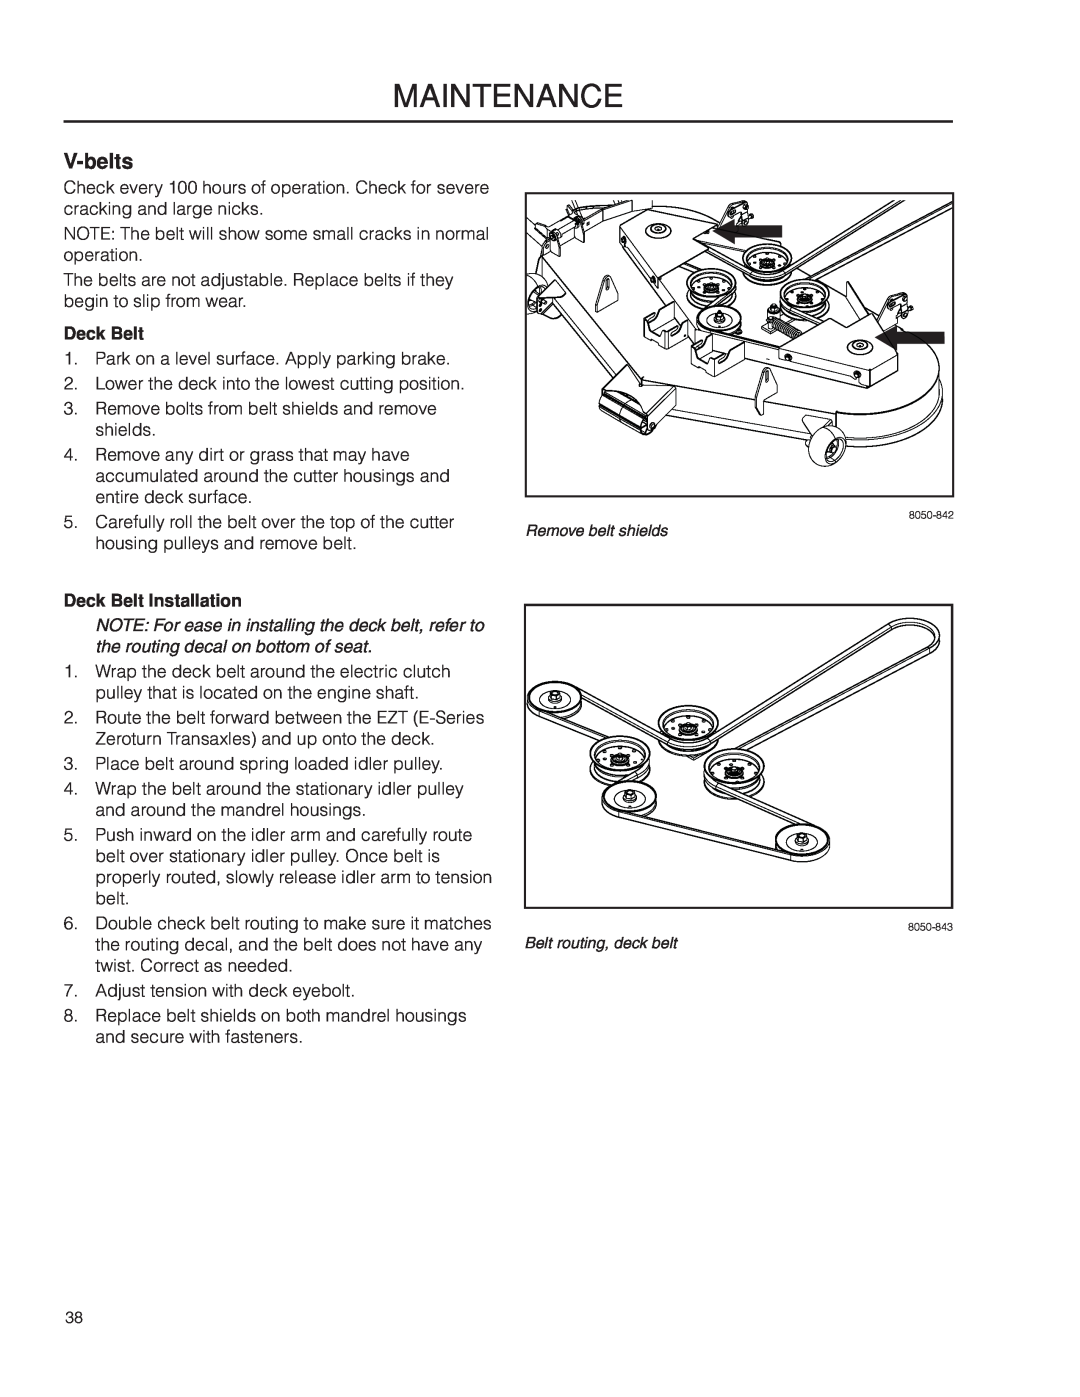 Dixon 966985402, 966985401 manual V-belts, Deck Belt Installation, Maintenance 